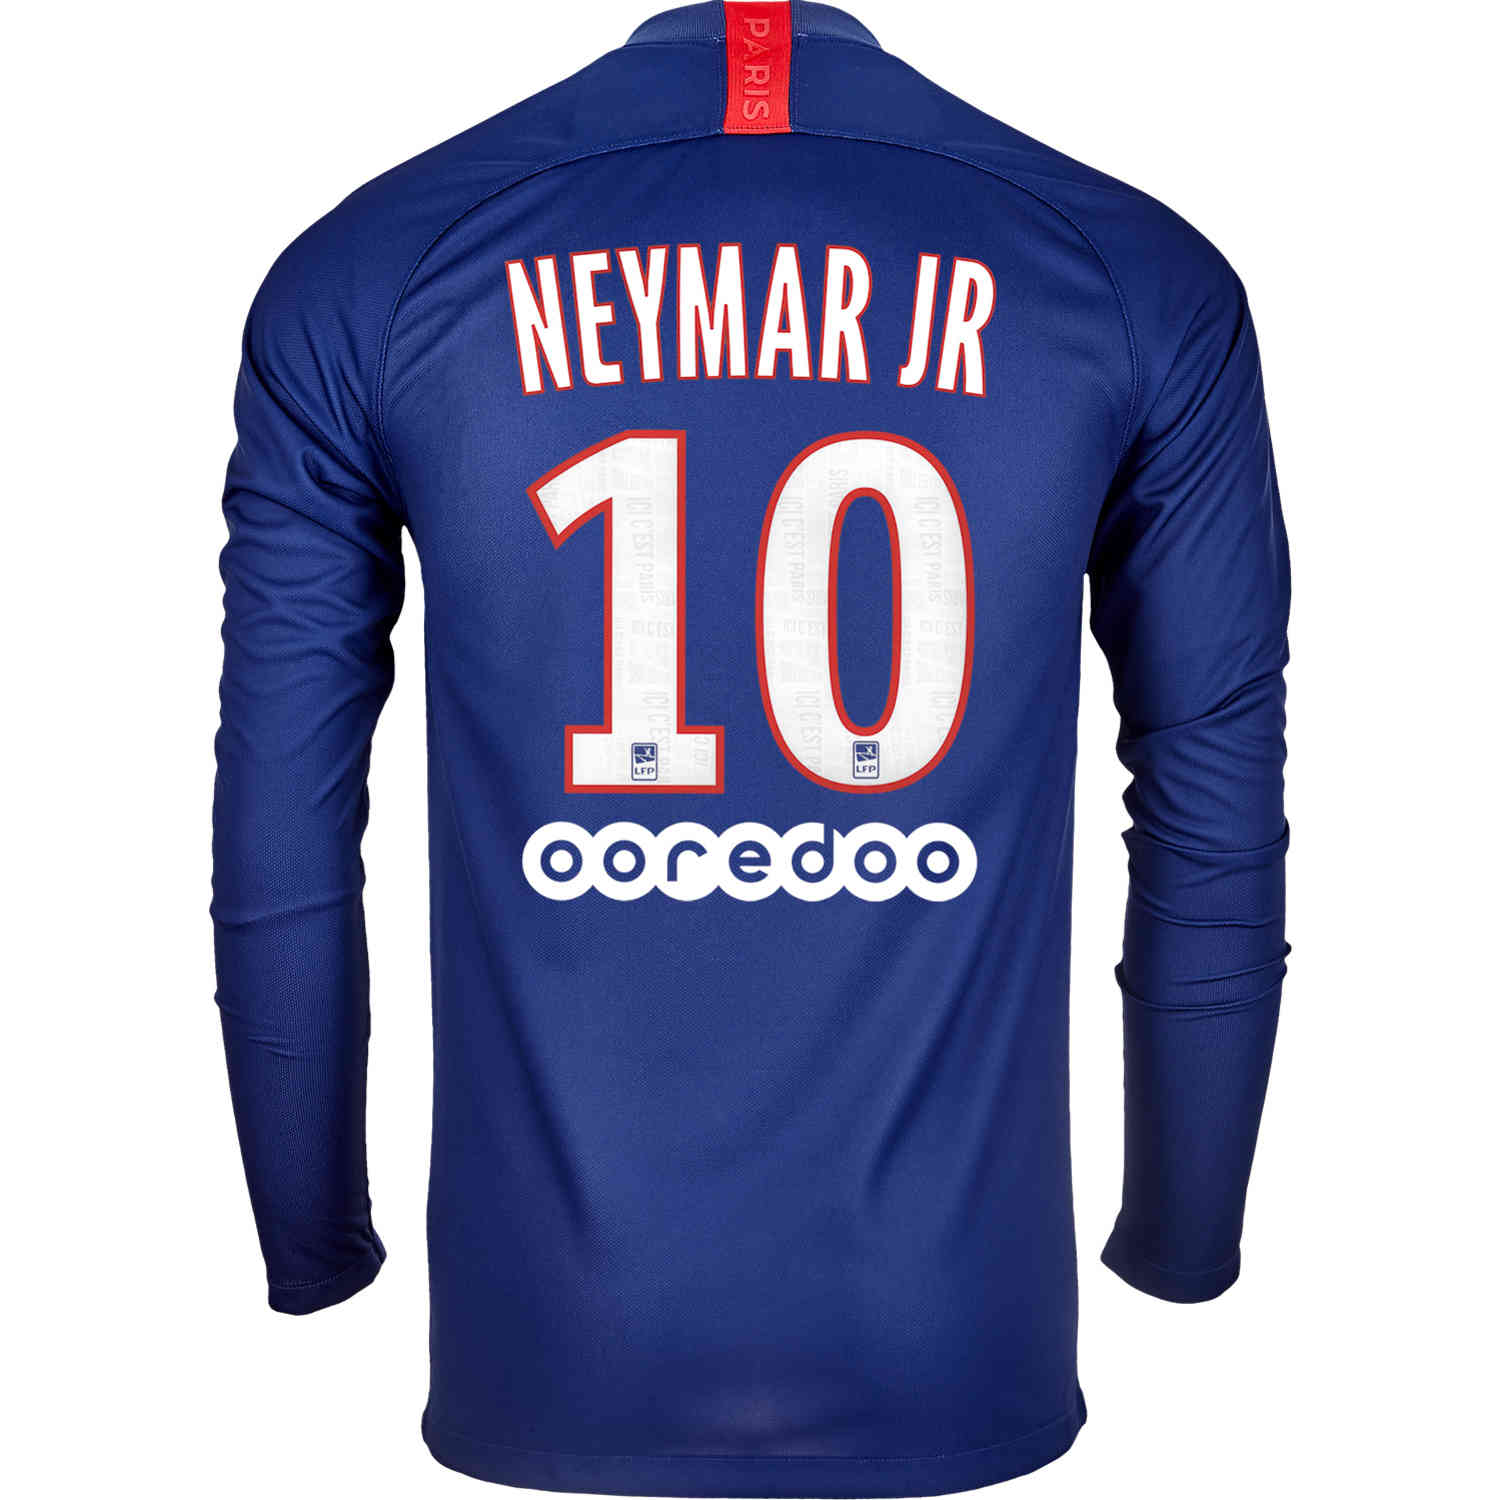 2019/20 Nike Neymar Jr PSG L/S Home 